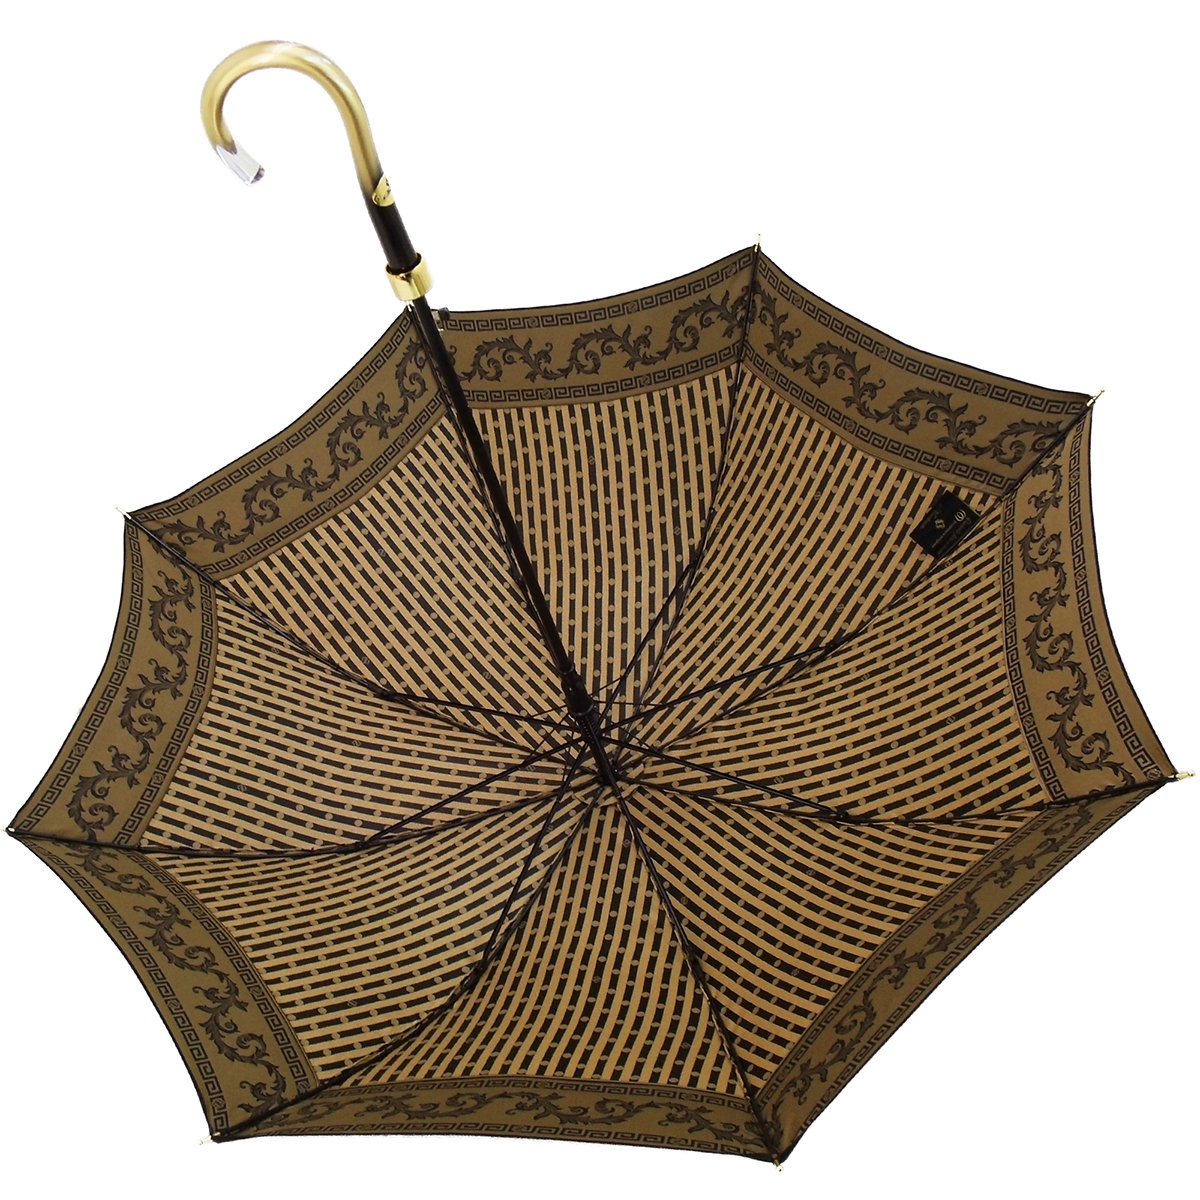 Wonderful Polka Dot Umbrella - il-marchesato